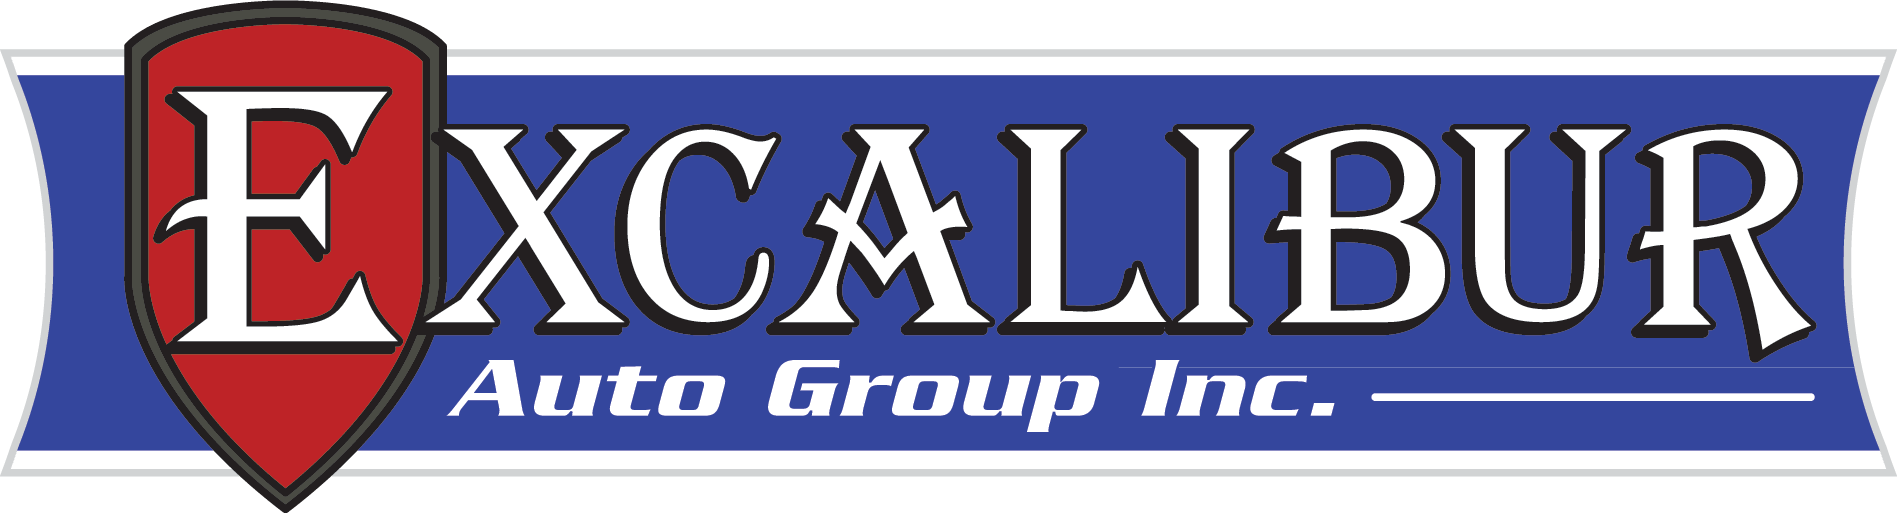 Excalibur Auto Group Inc Logo